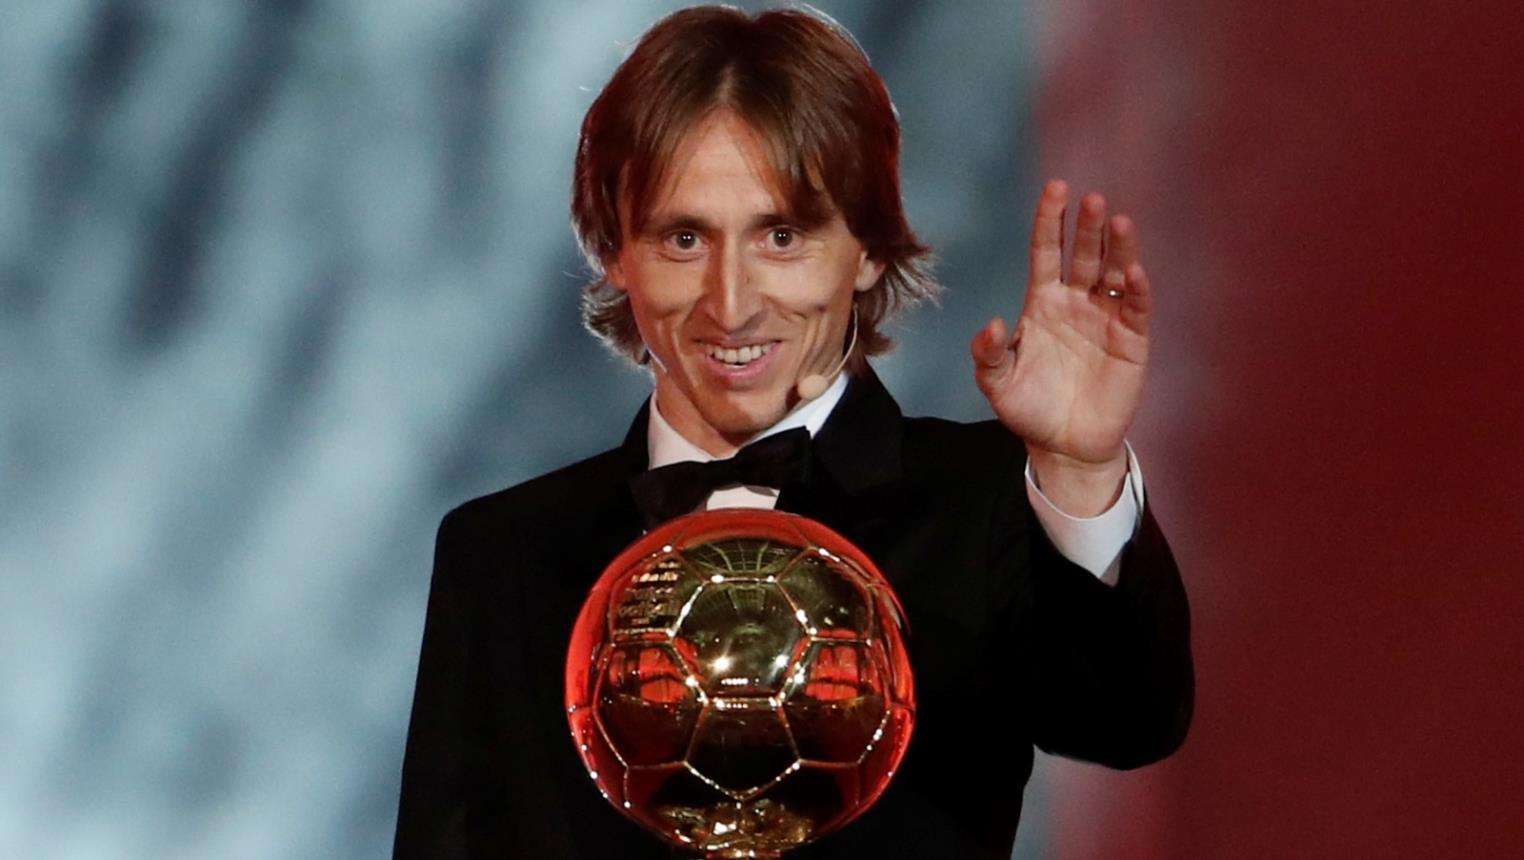 Luka Modric won 2018 Ballon d’Or